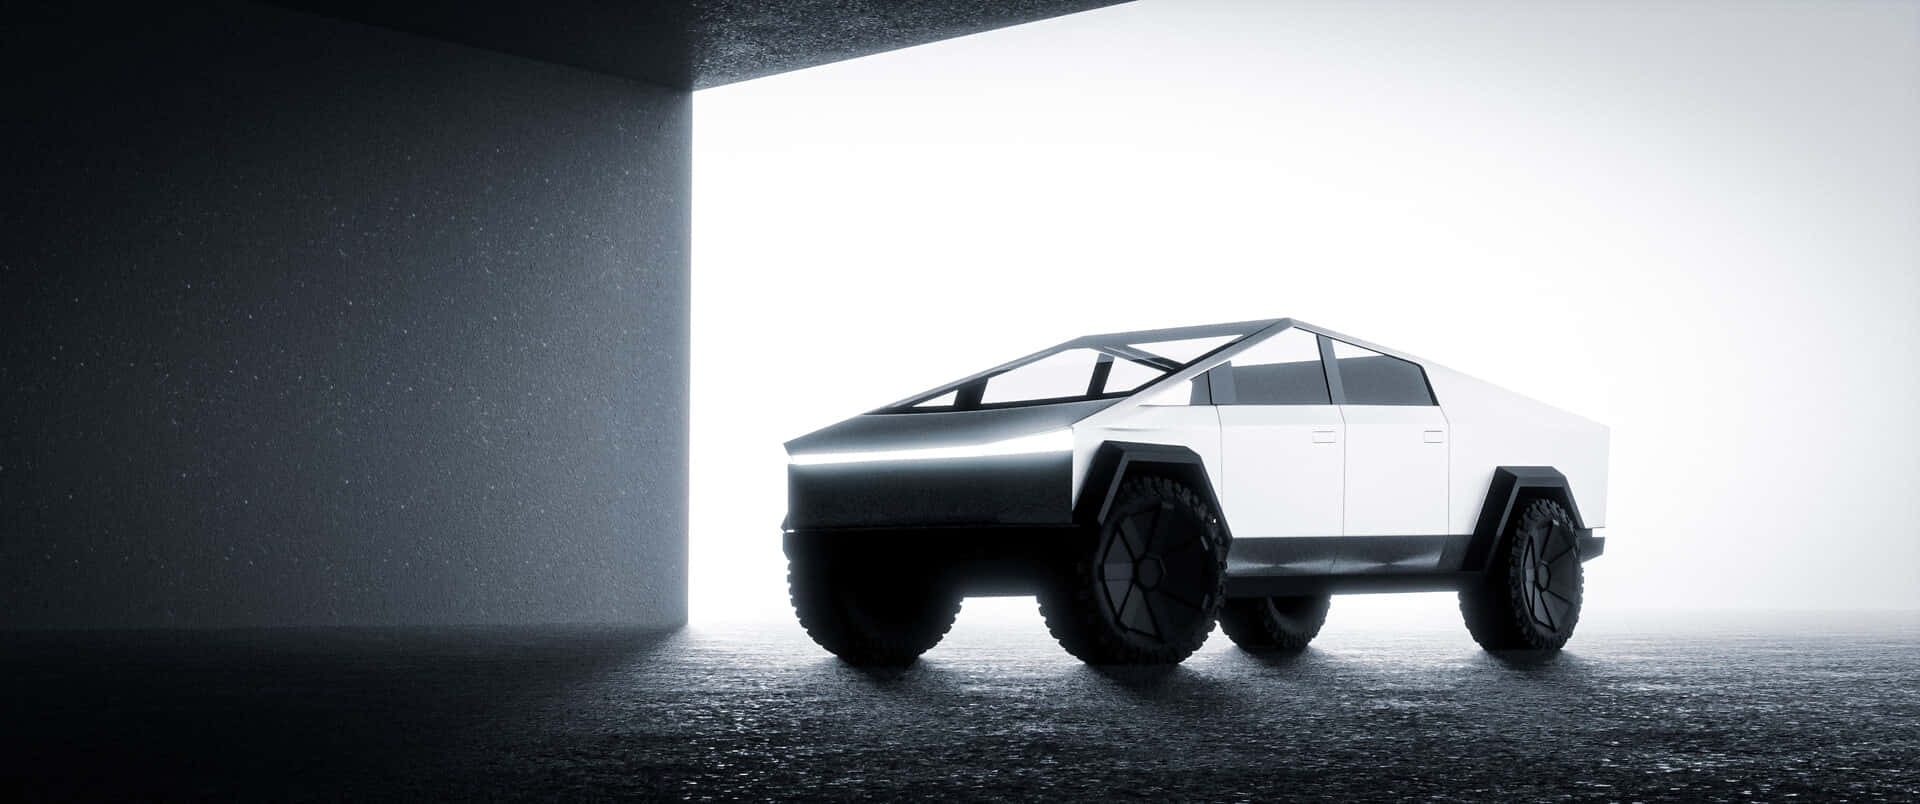 Tesla Cybertruck Wallpaper 4K Concept cars Dark background 882